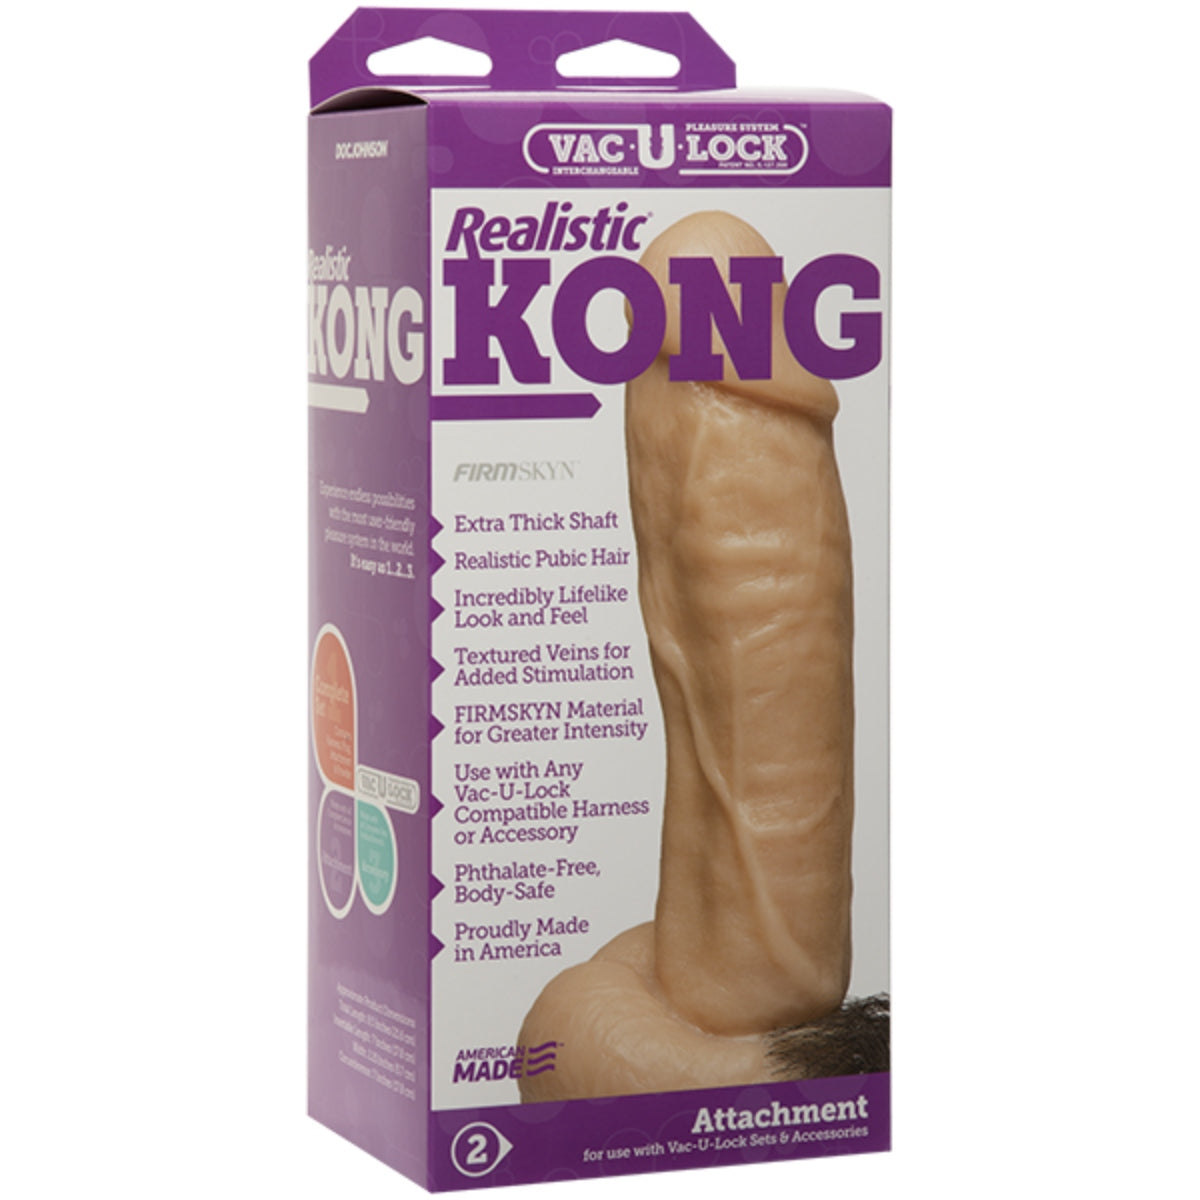 Vac-U-Lock Realistic Kong Firmskyn Dildo Pink 8.5 Inch